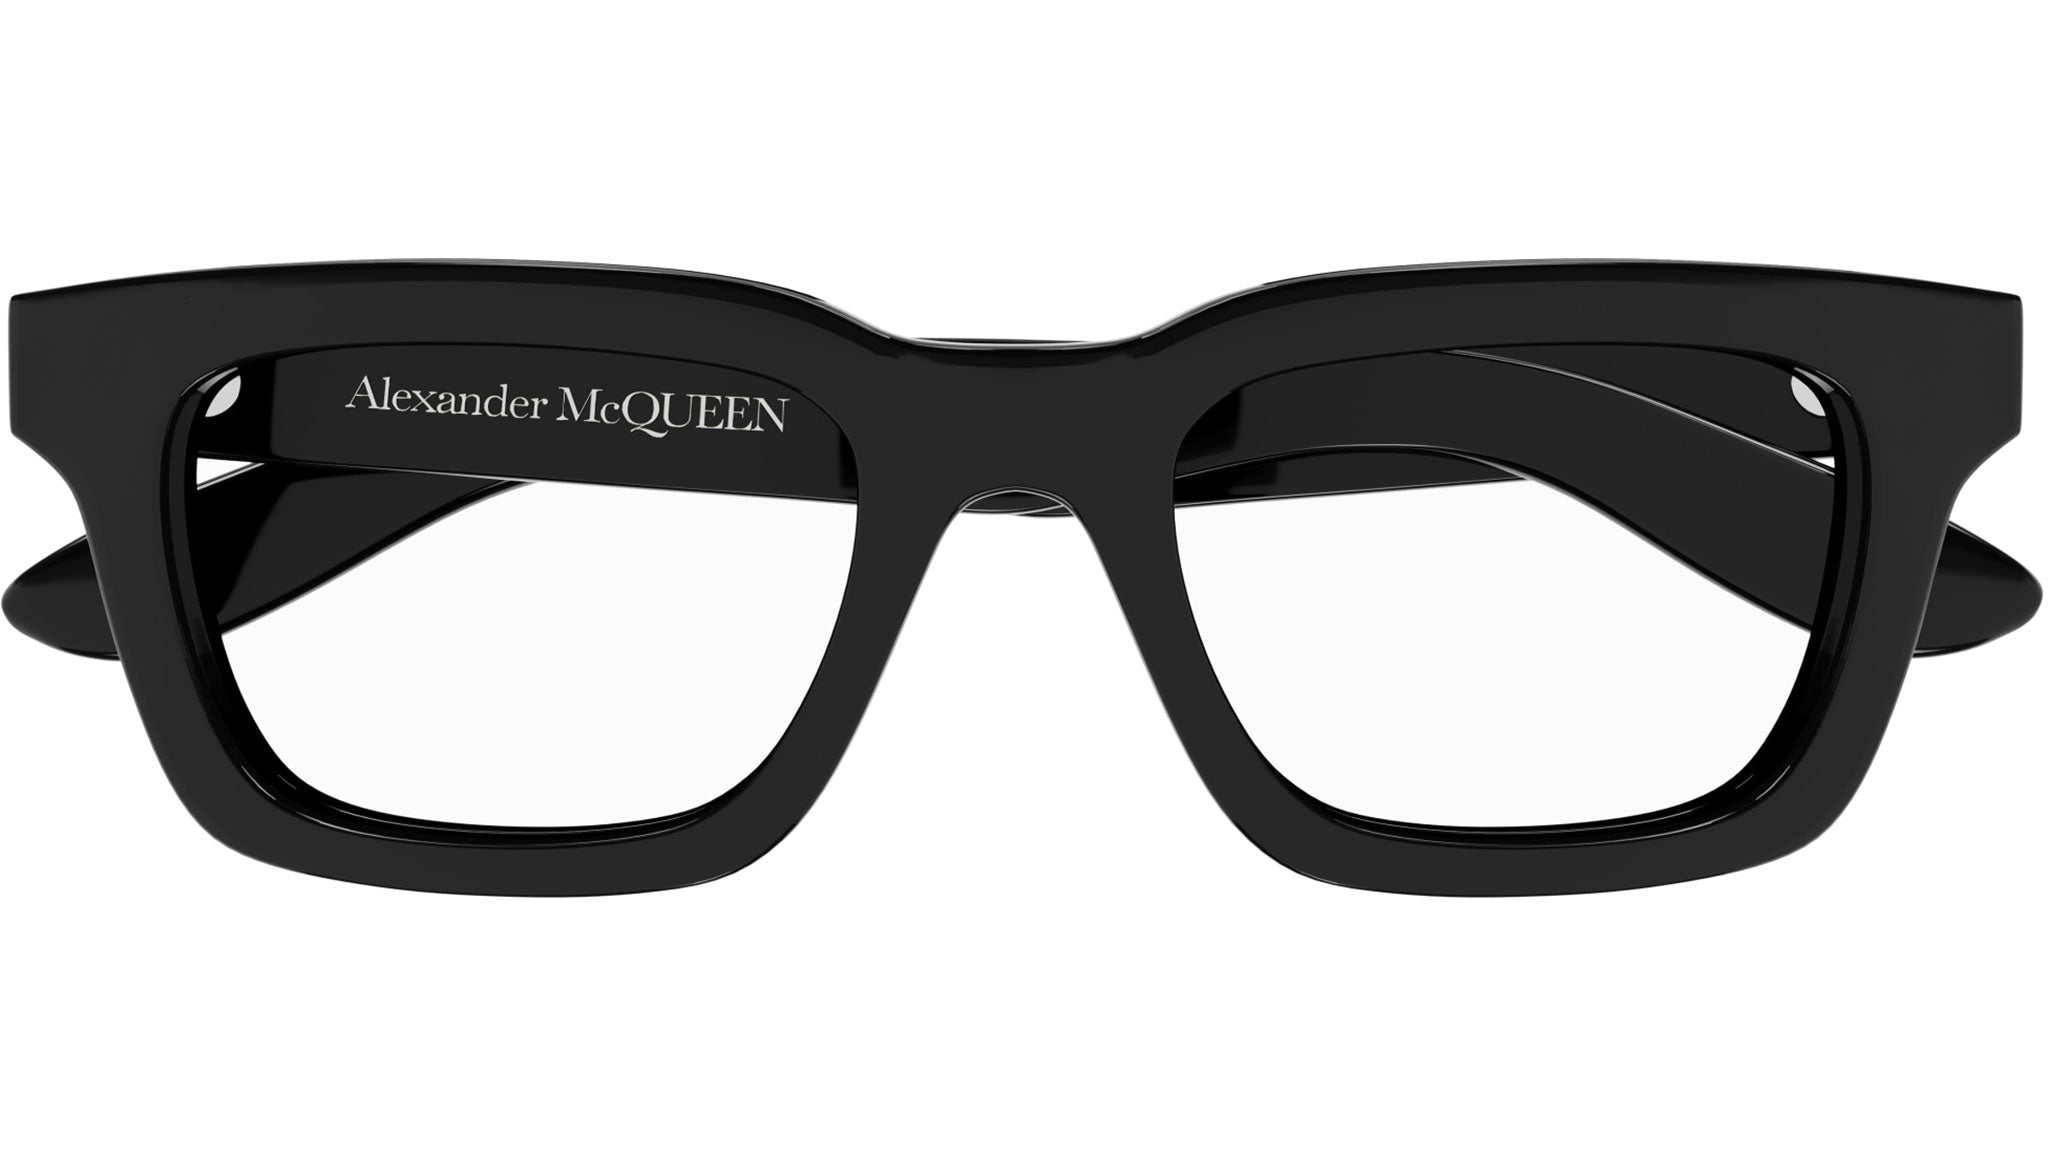 Alexander McQueen Logo  Alexander mcqueen logo, Fashion logo branding, Logo  quotes